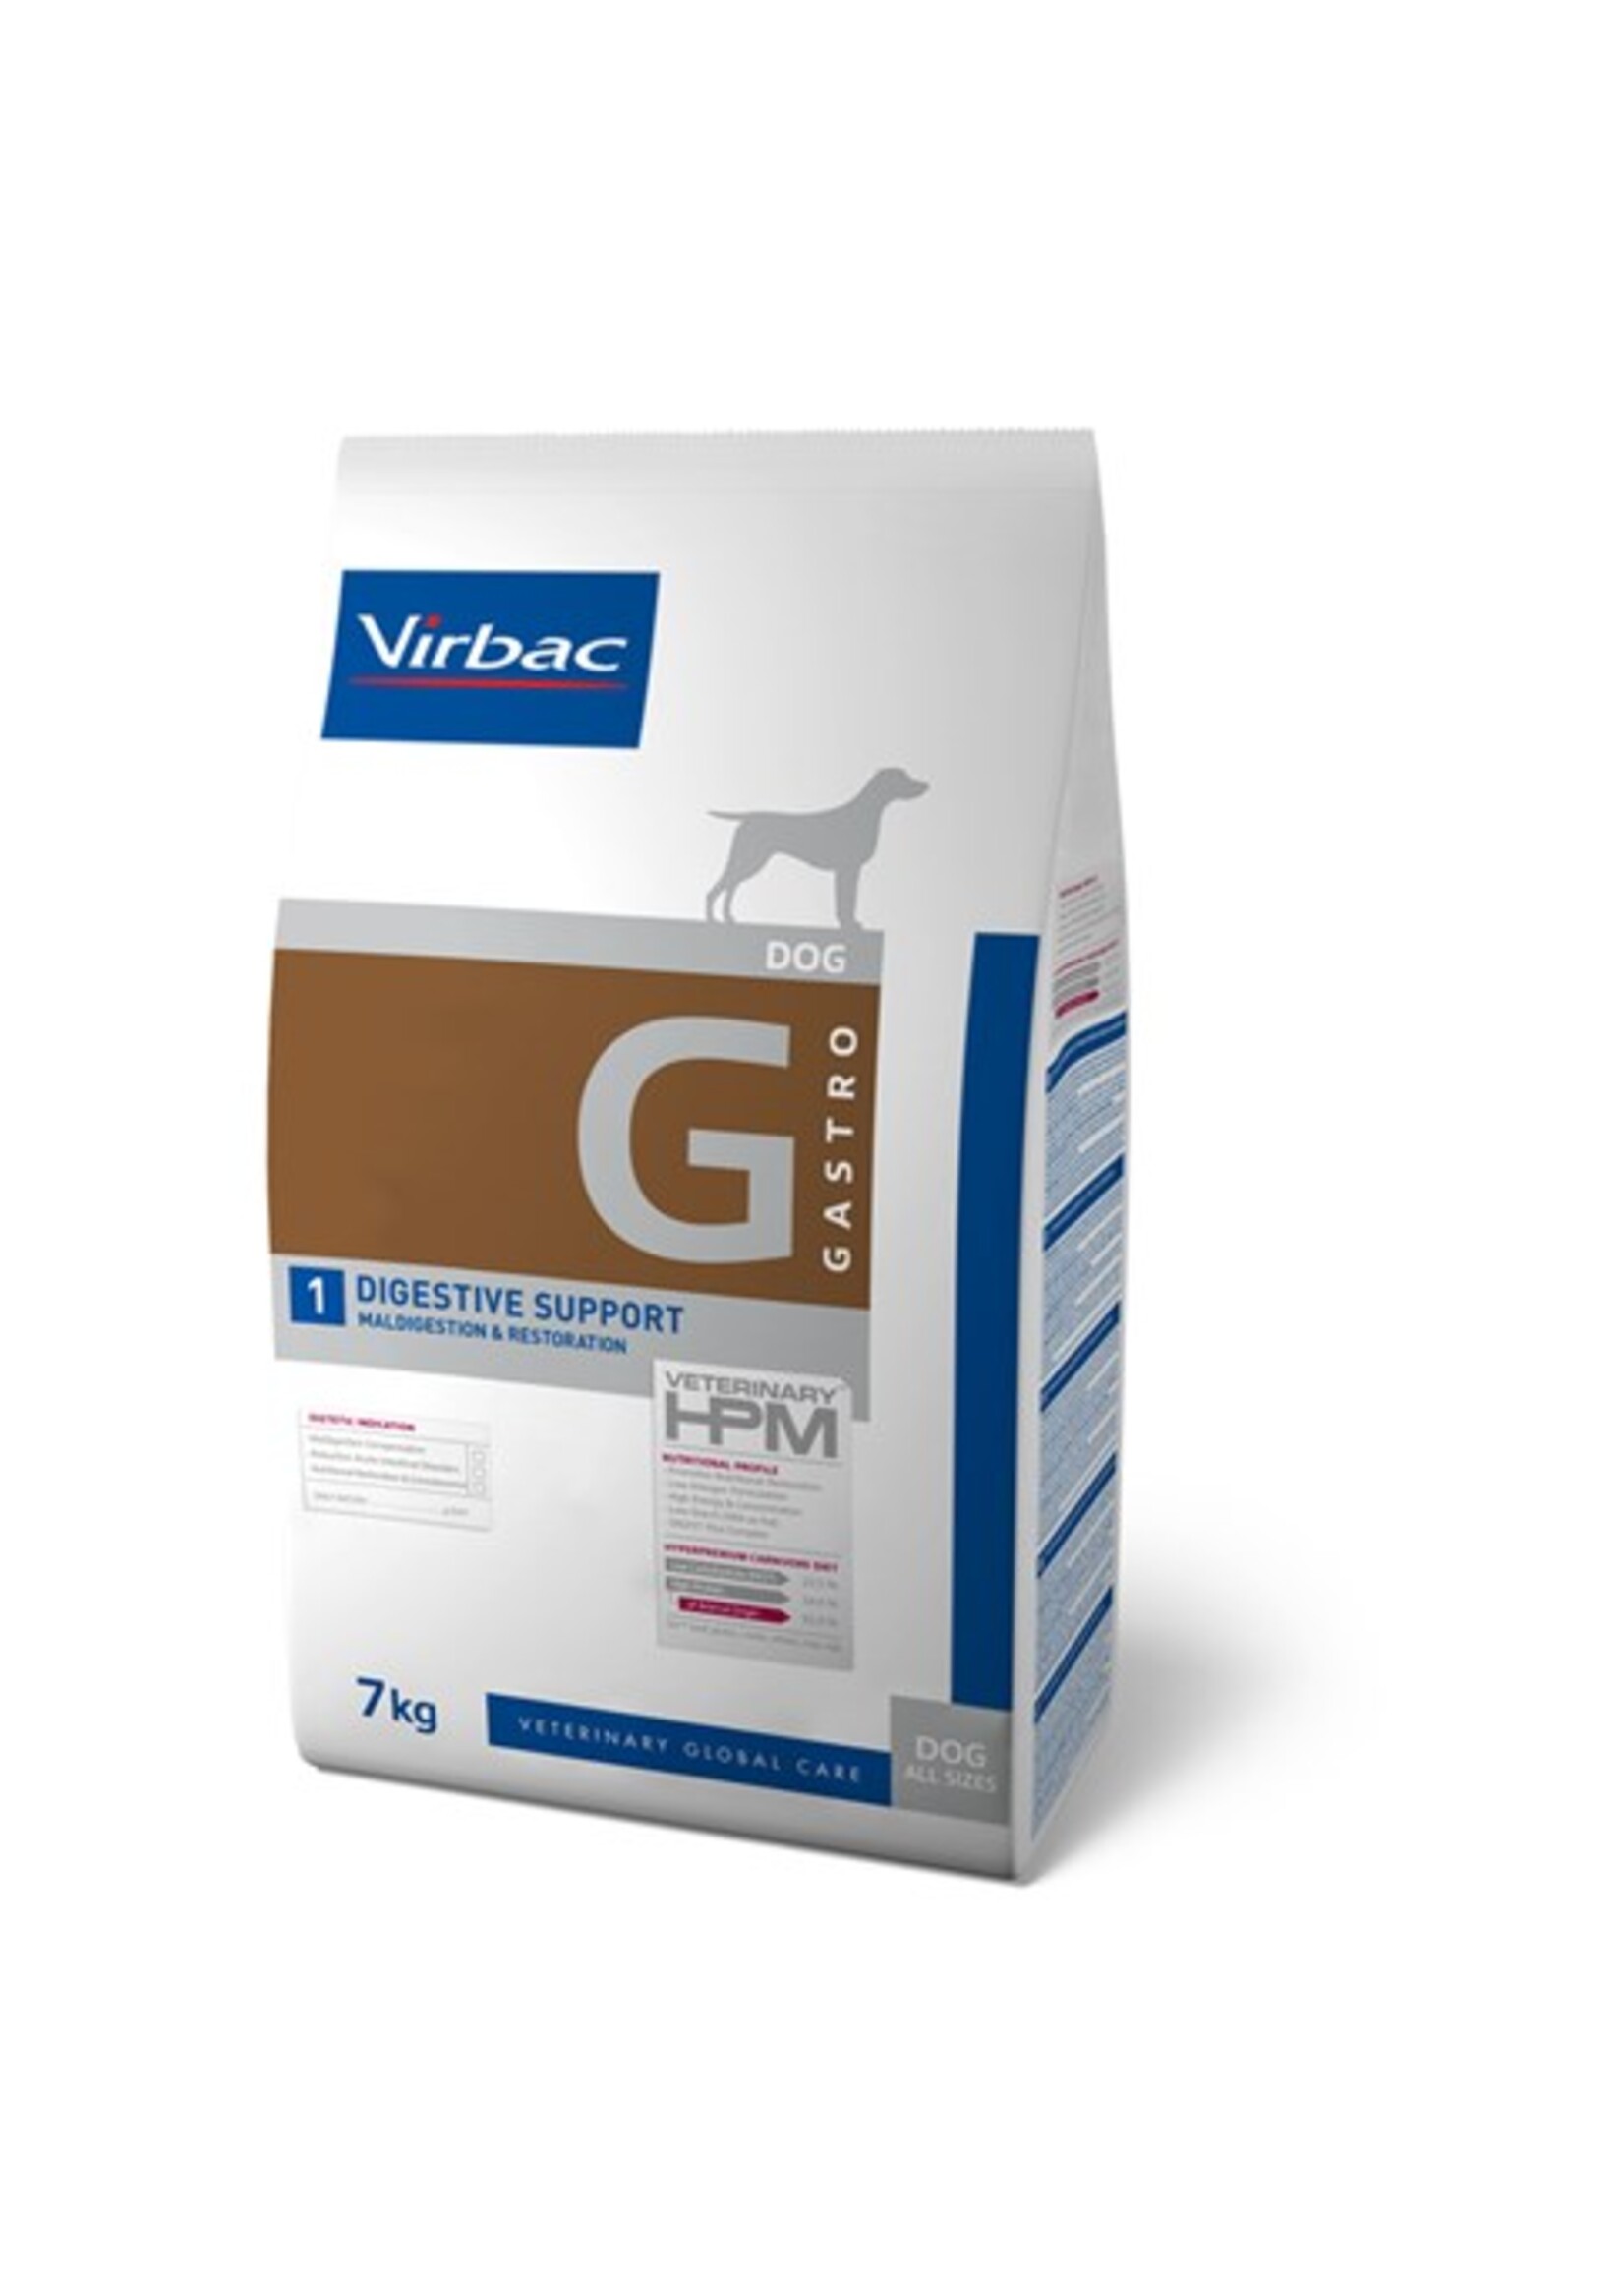 Virbac Virbac Hpm Dog Digestive Support G1 7kg